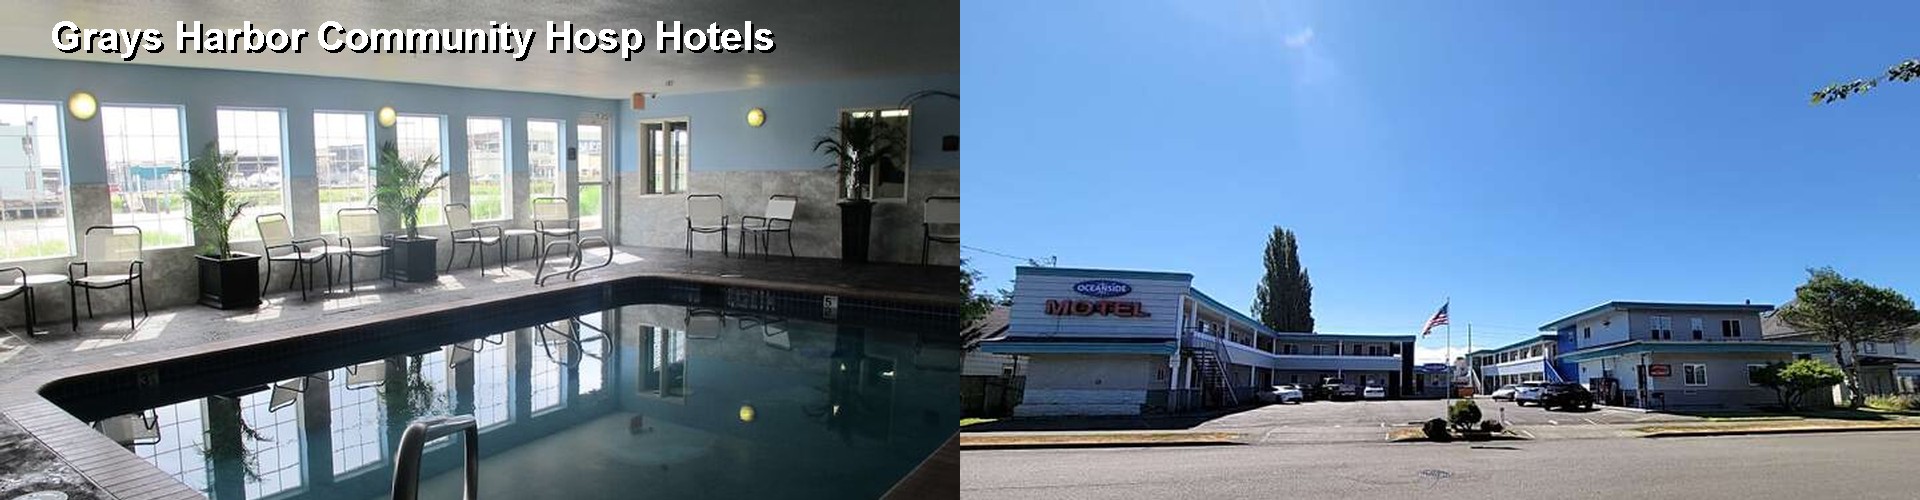 5 Best Hotels near Grays Harbor Community Hosp